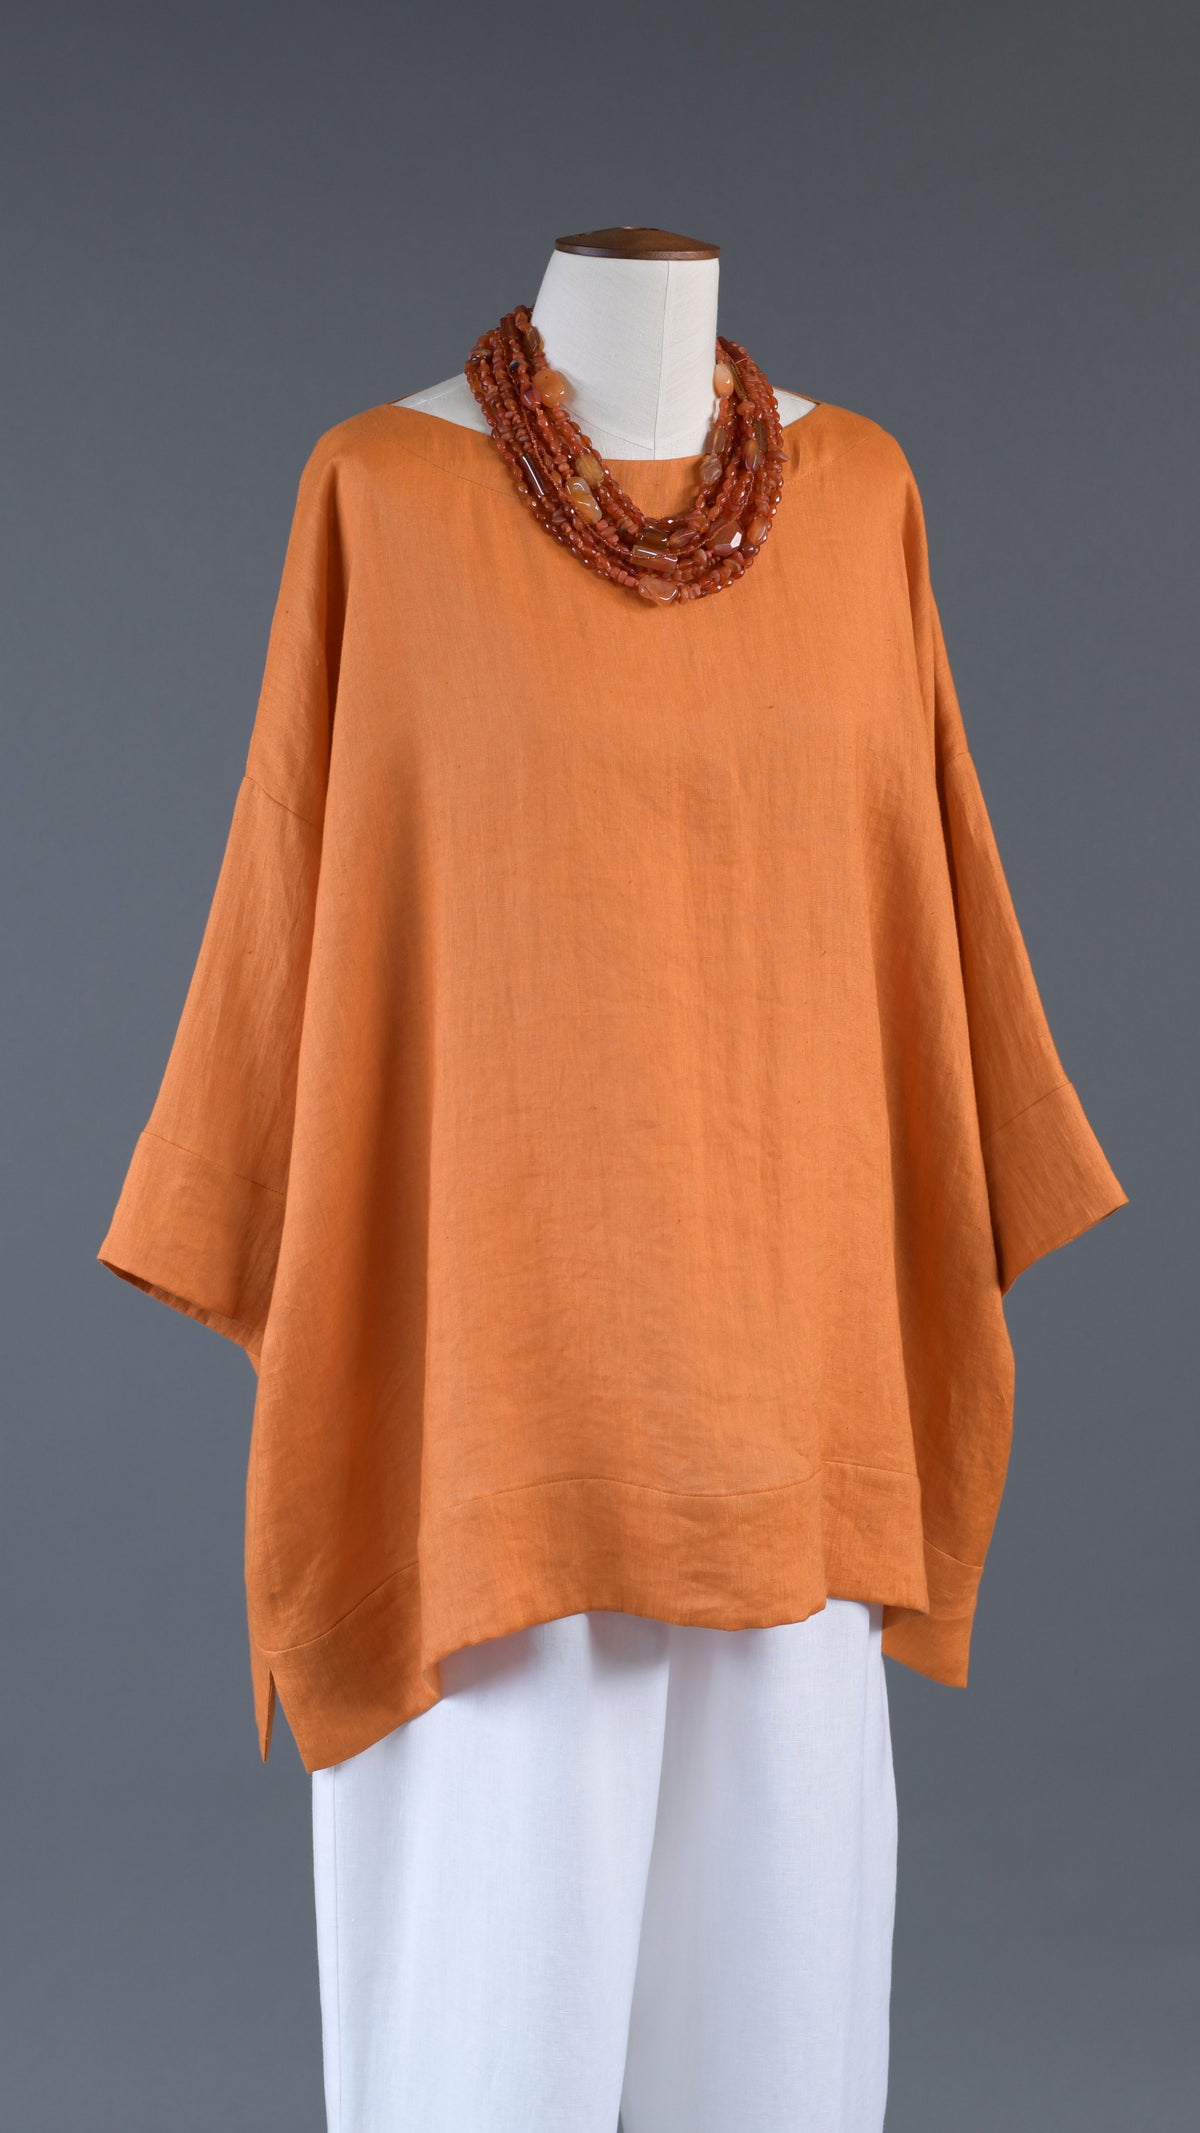 scoop neck 3/4 sleeve top with hem bands - long in amber orange